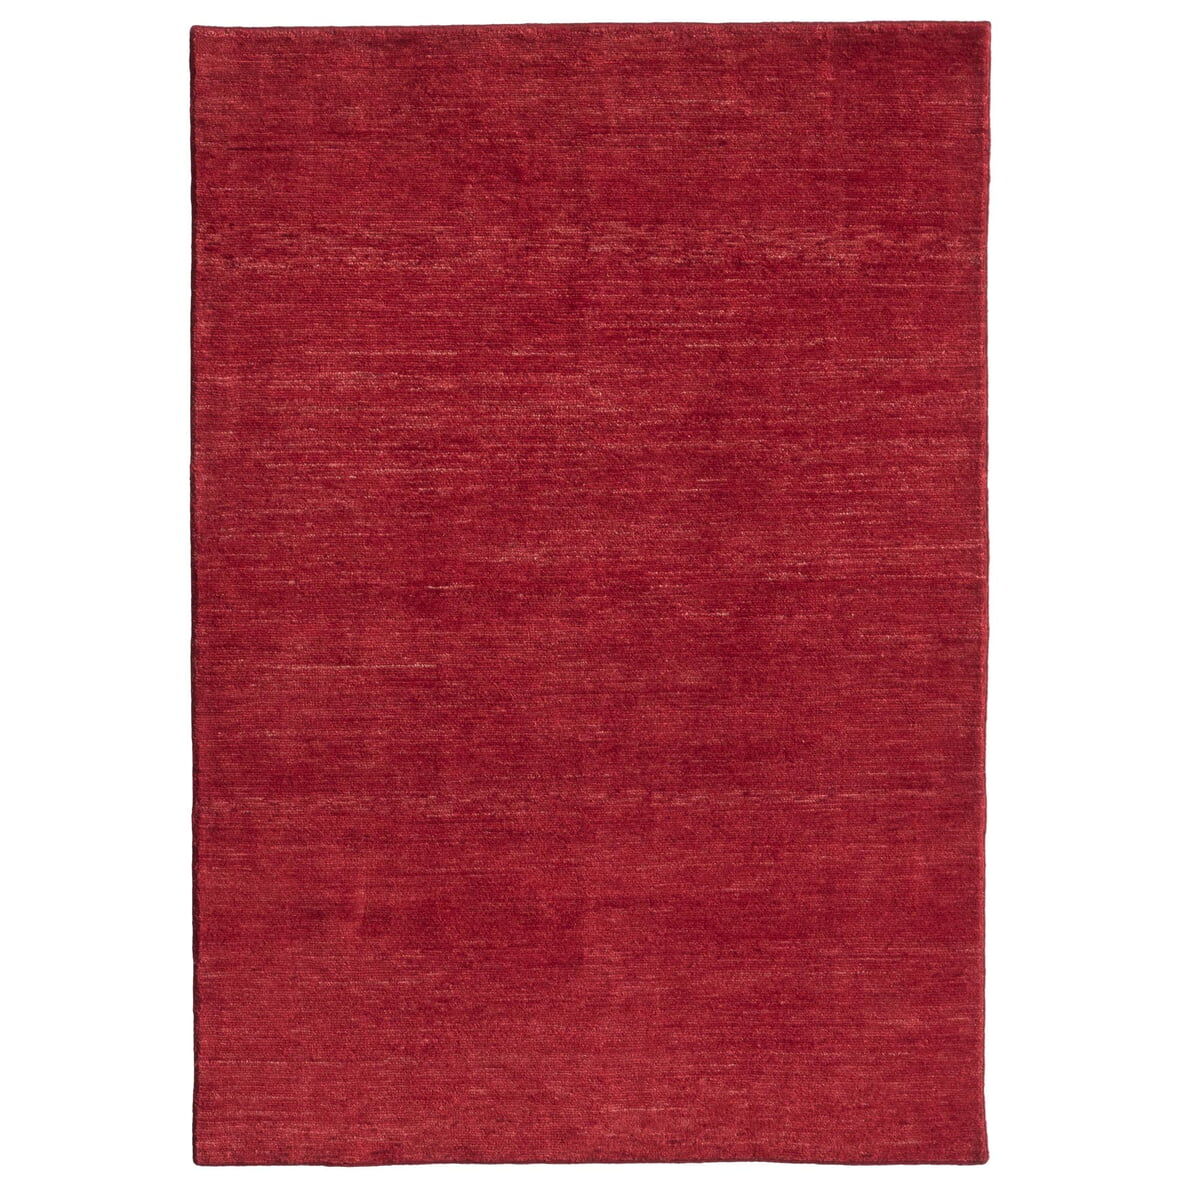 nanimarquina - Persian Colors Teppich, 200 x 300 cm, scharlachrot